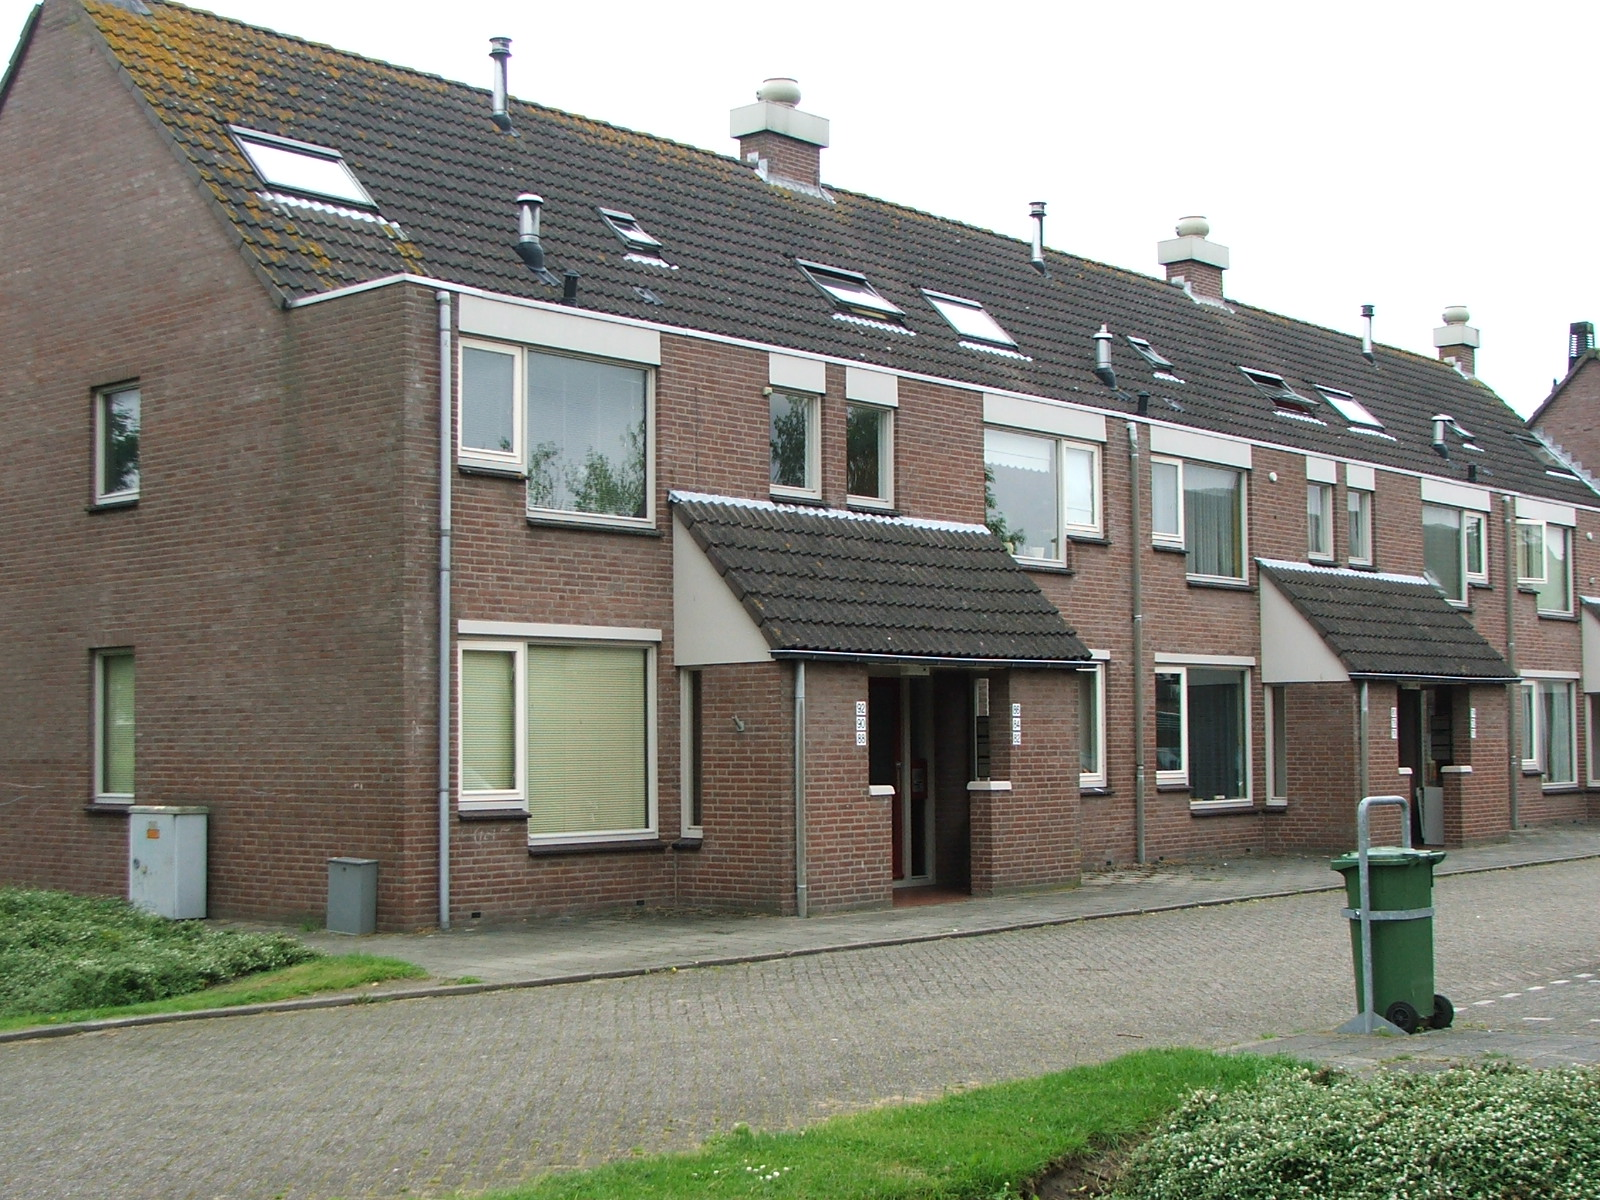 Kloofpad 62, 2451 GD Leimuiden, Nederland